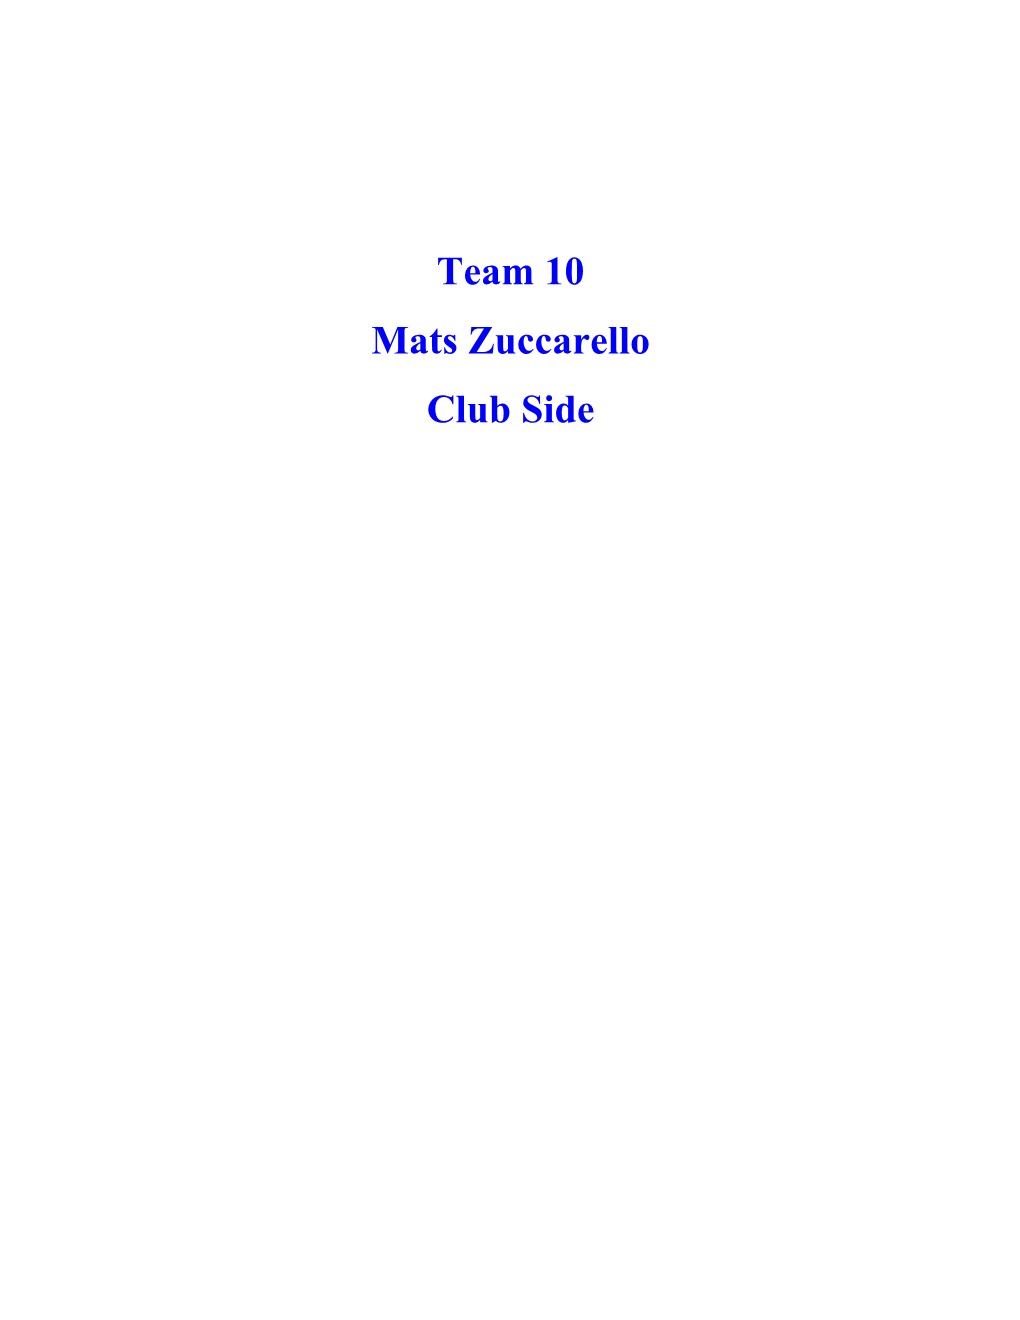 Team 10 Mats Zuccarello Club Side